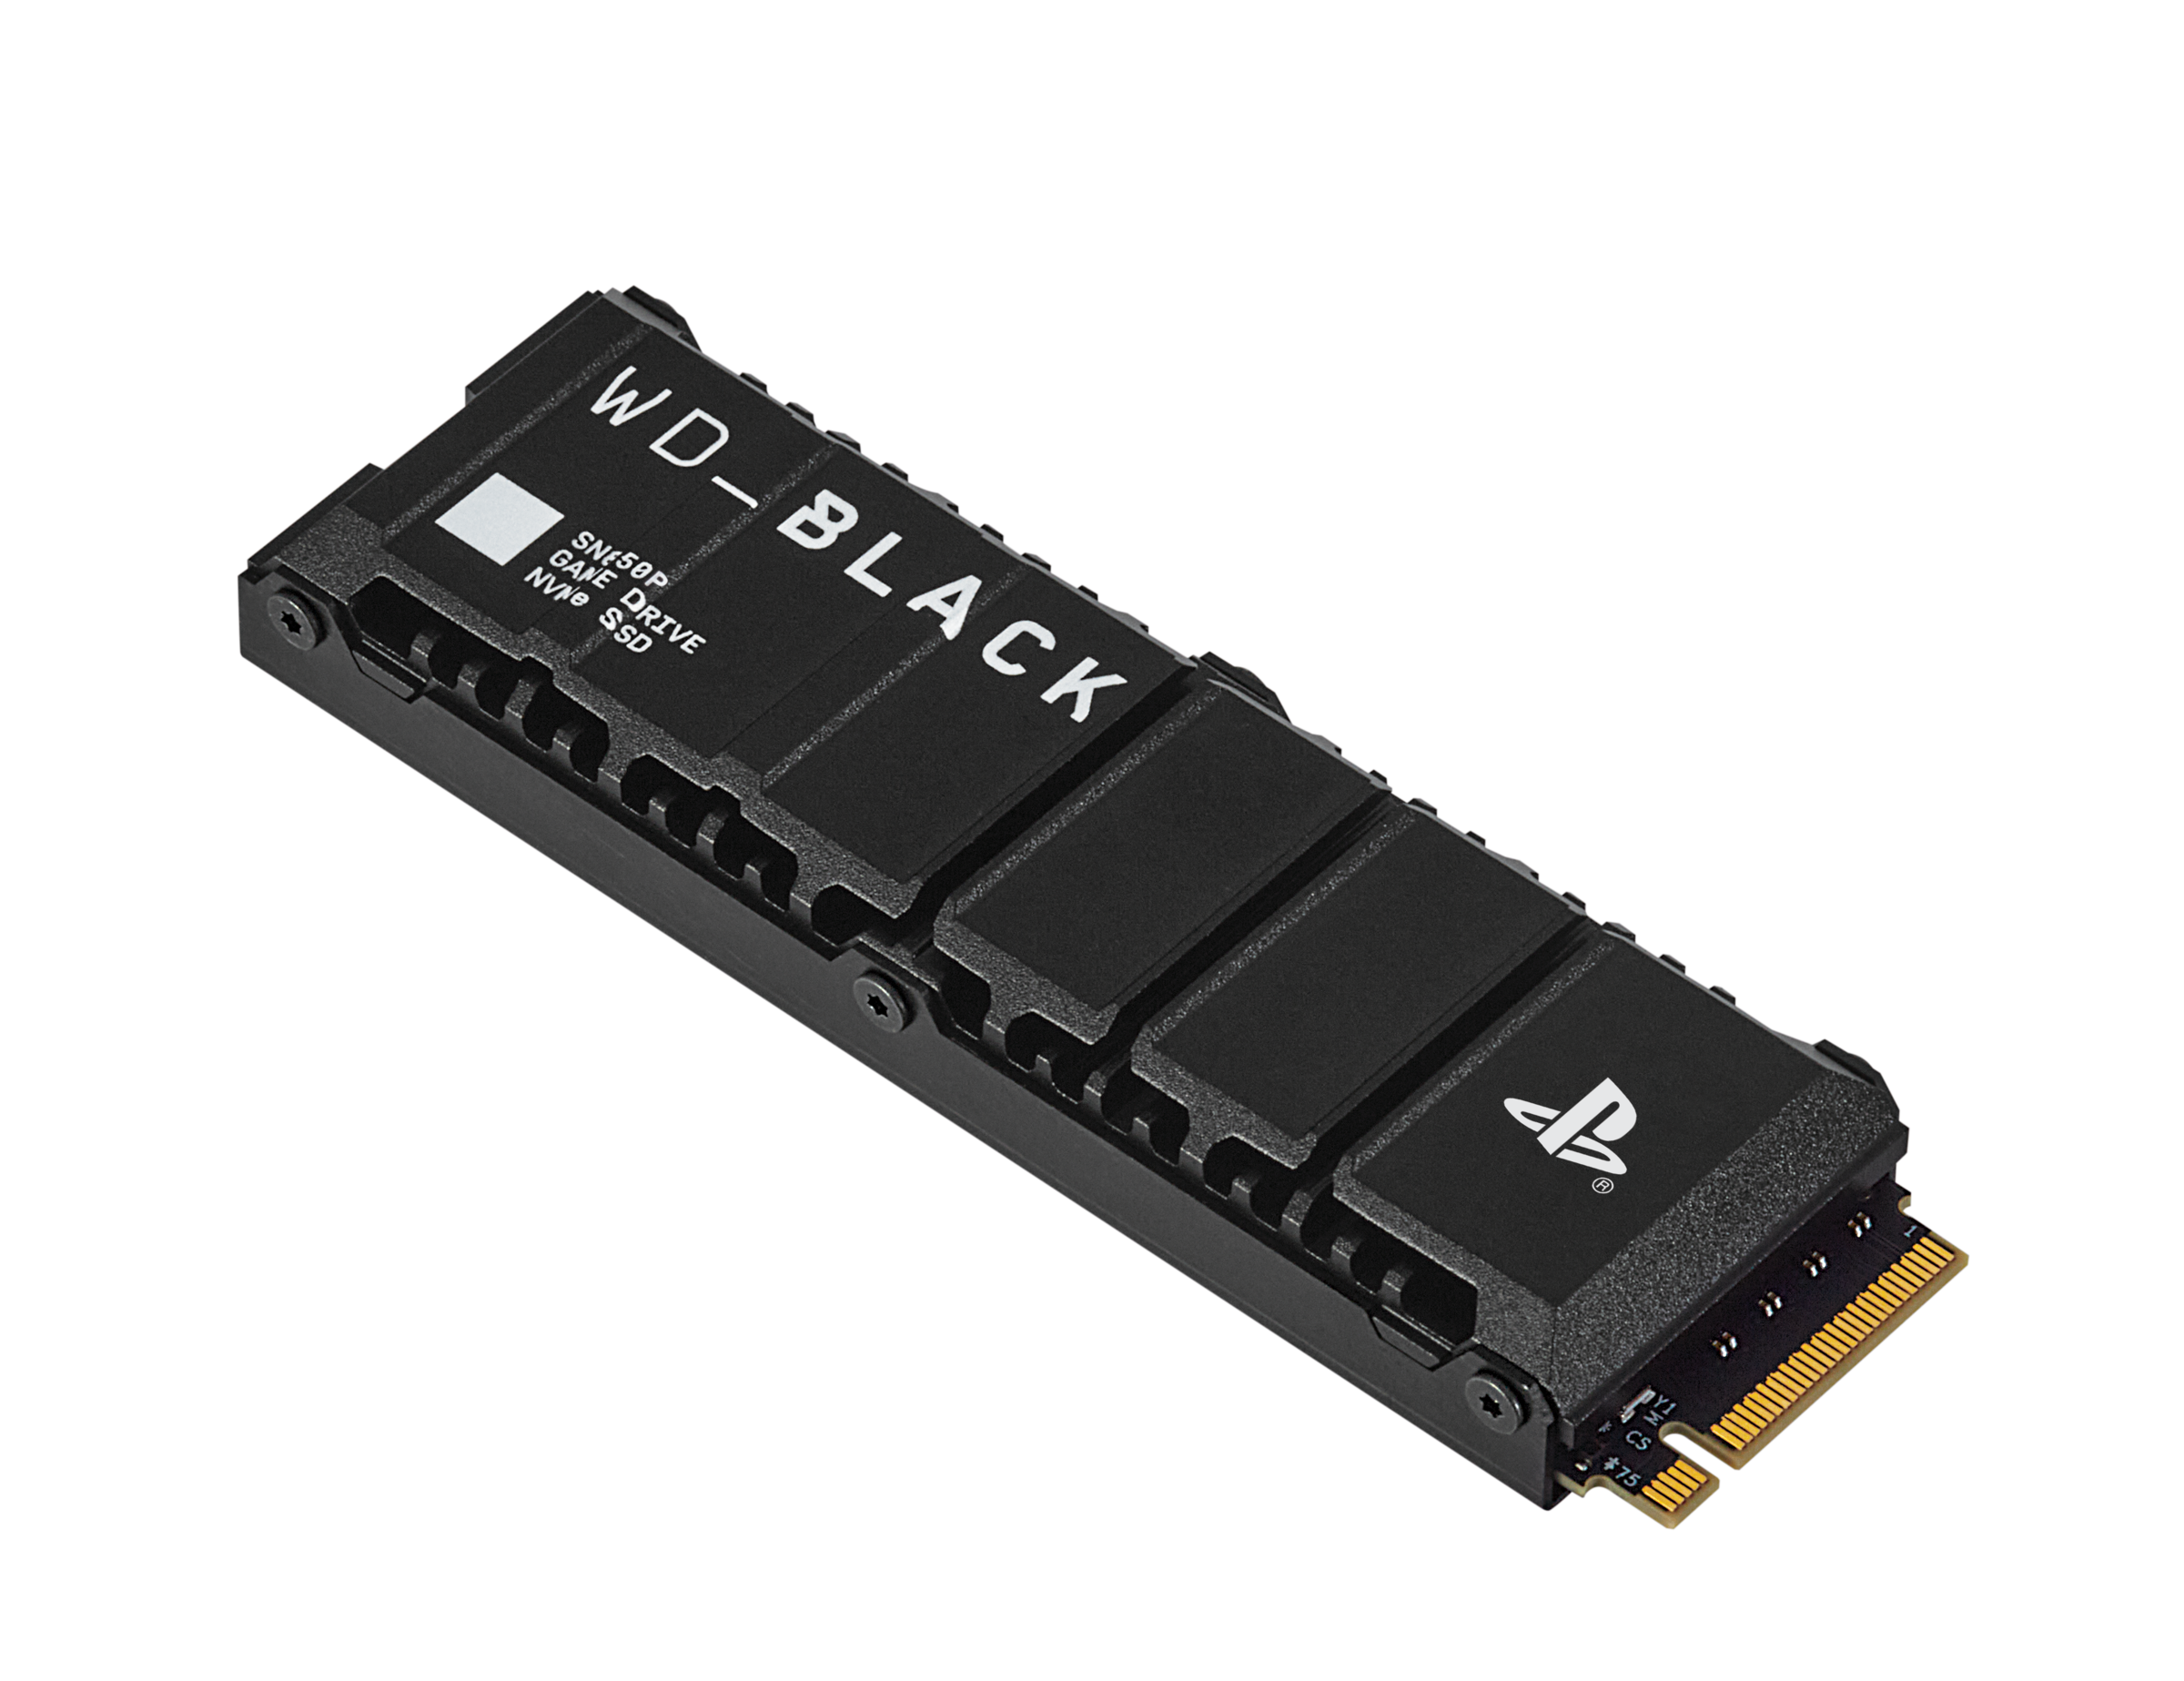 WD_Black interne SSD »SN850P«, NVMe SSD, mit Heatsink